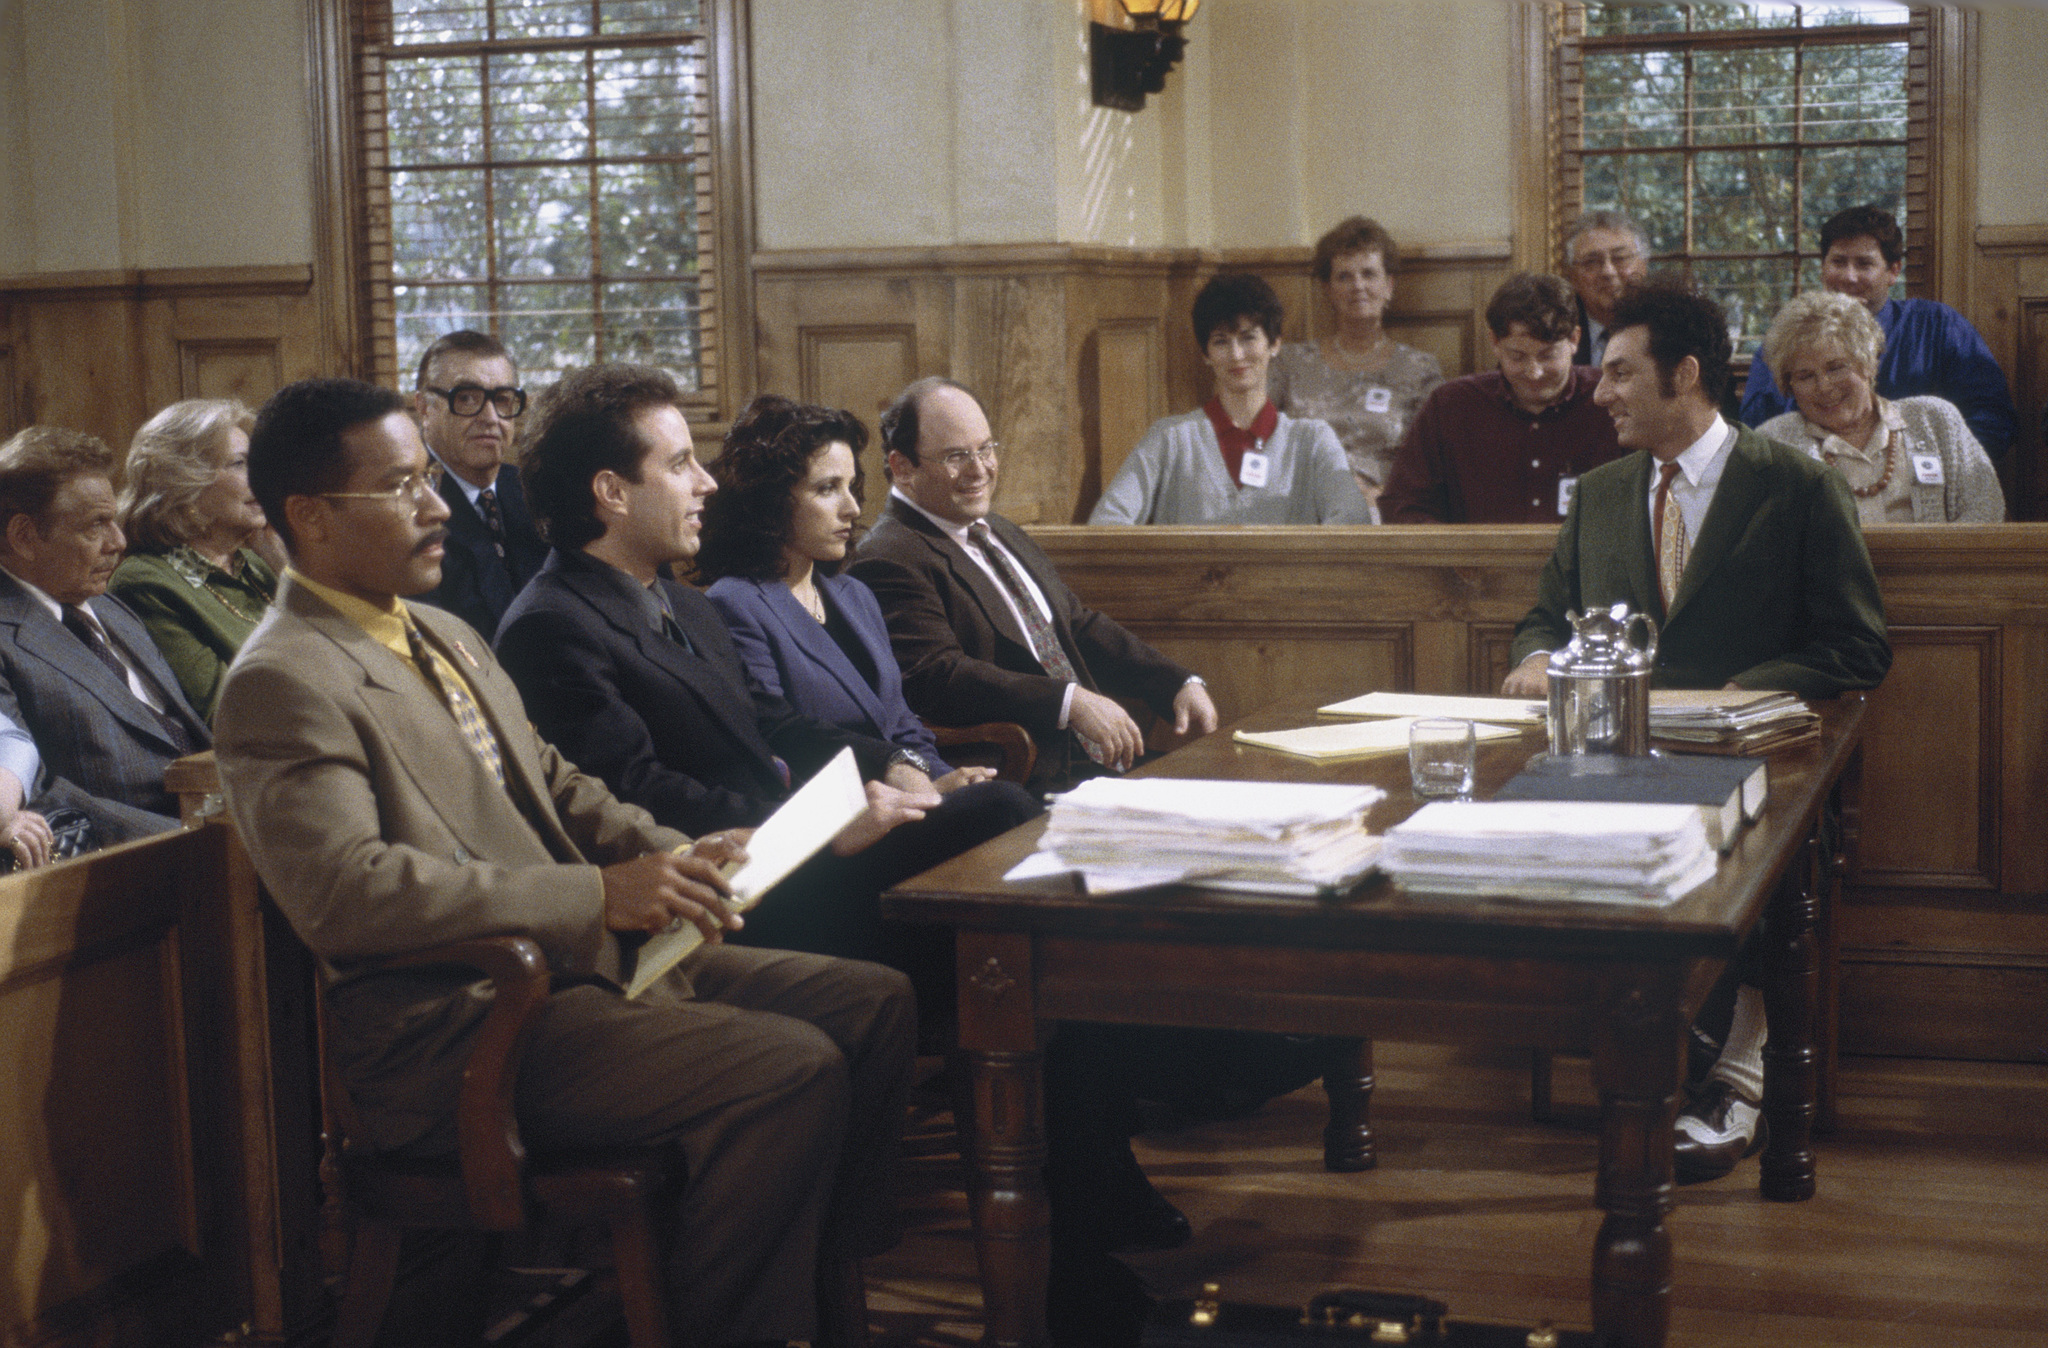 Julia Louis-Dreyfus, Jerry Seinfeld, Jason Alexander, Phil Morris and Michael Richards at event of Seinfeld (1989)